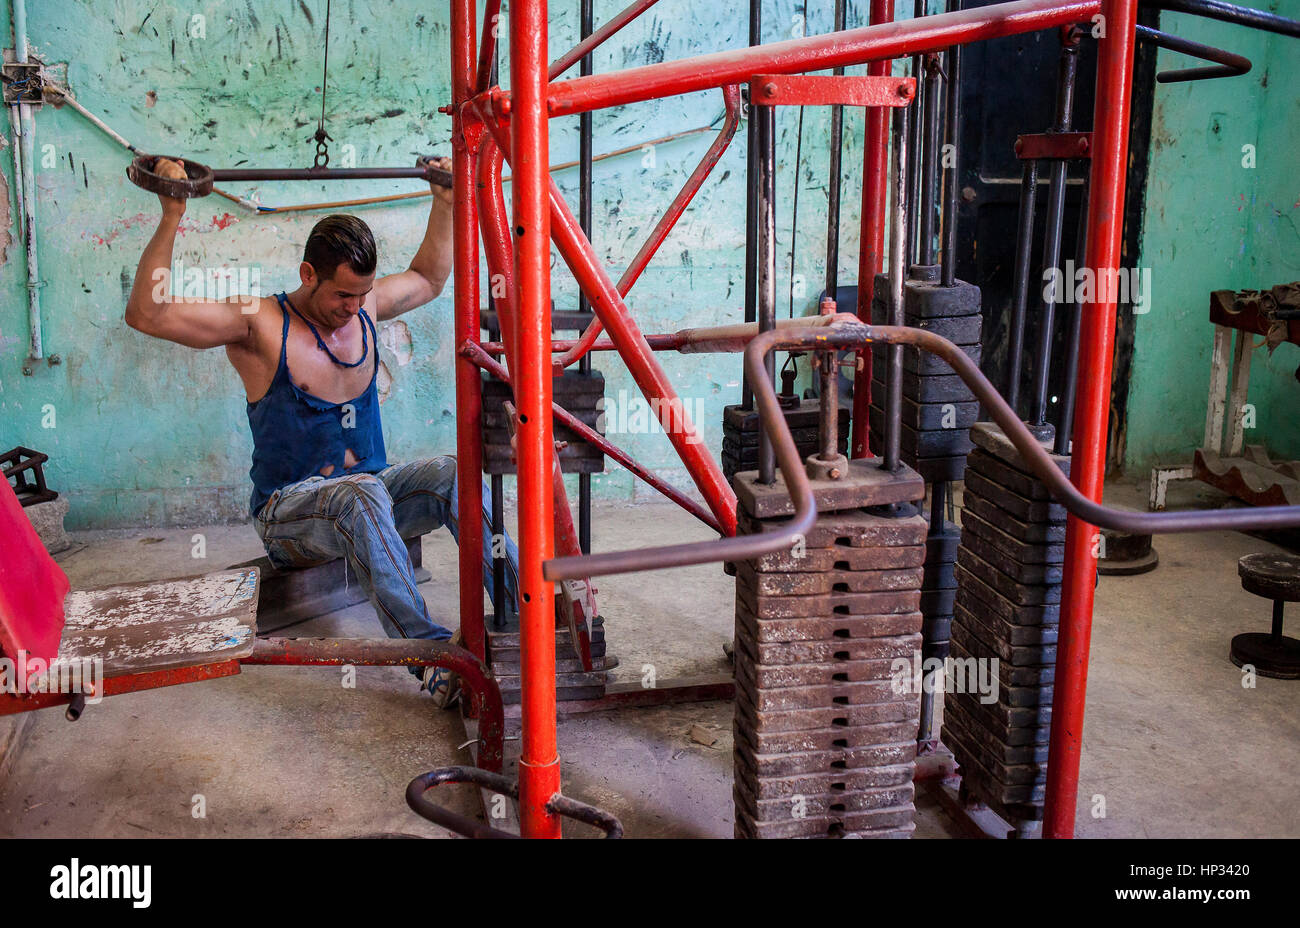 Body builder, muscleman, A Cuban man does exercise at a bodybuilding gym, in San Rafael street, Centro Habana, La Habana, Cuba Stock Photo